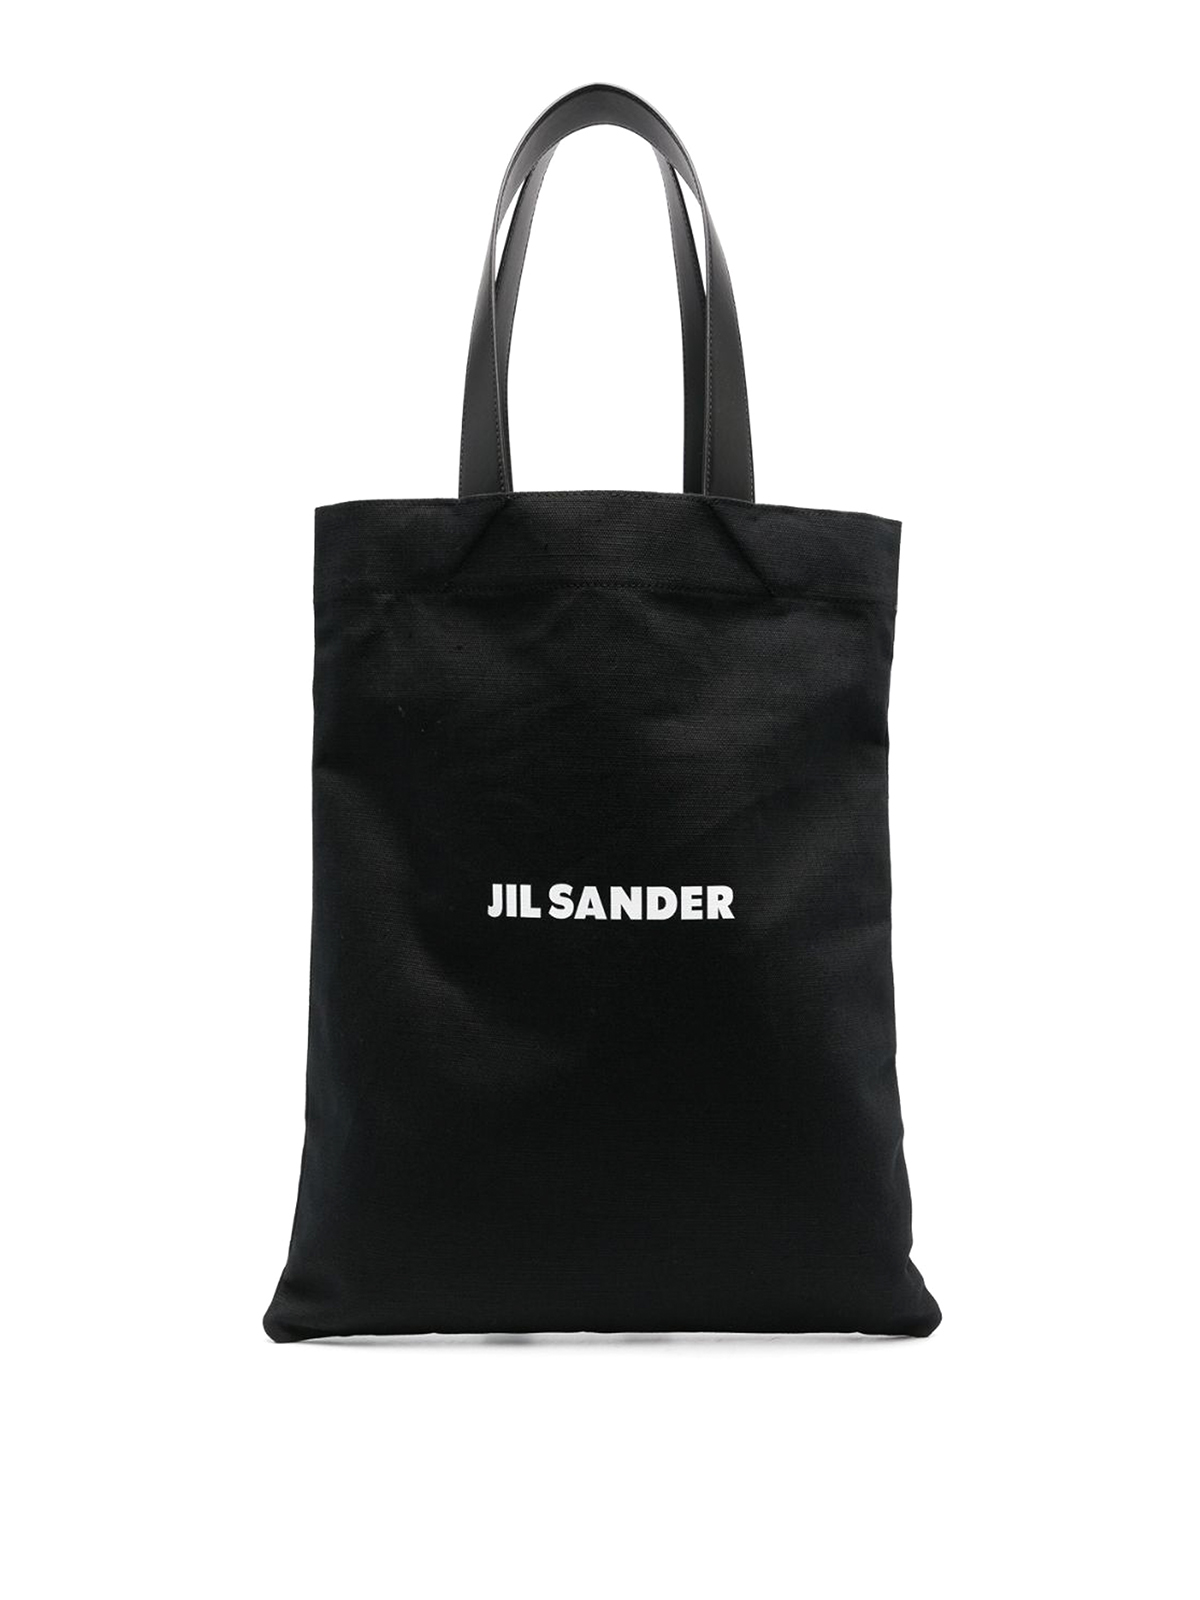 Jil Sander Book Tote Canvas Shopping Bag In Black